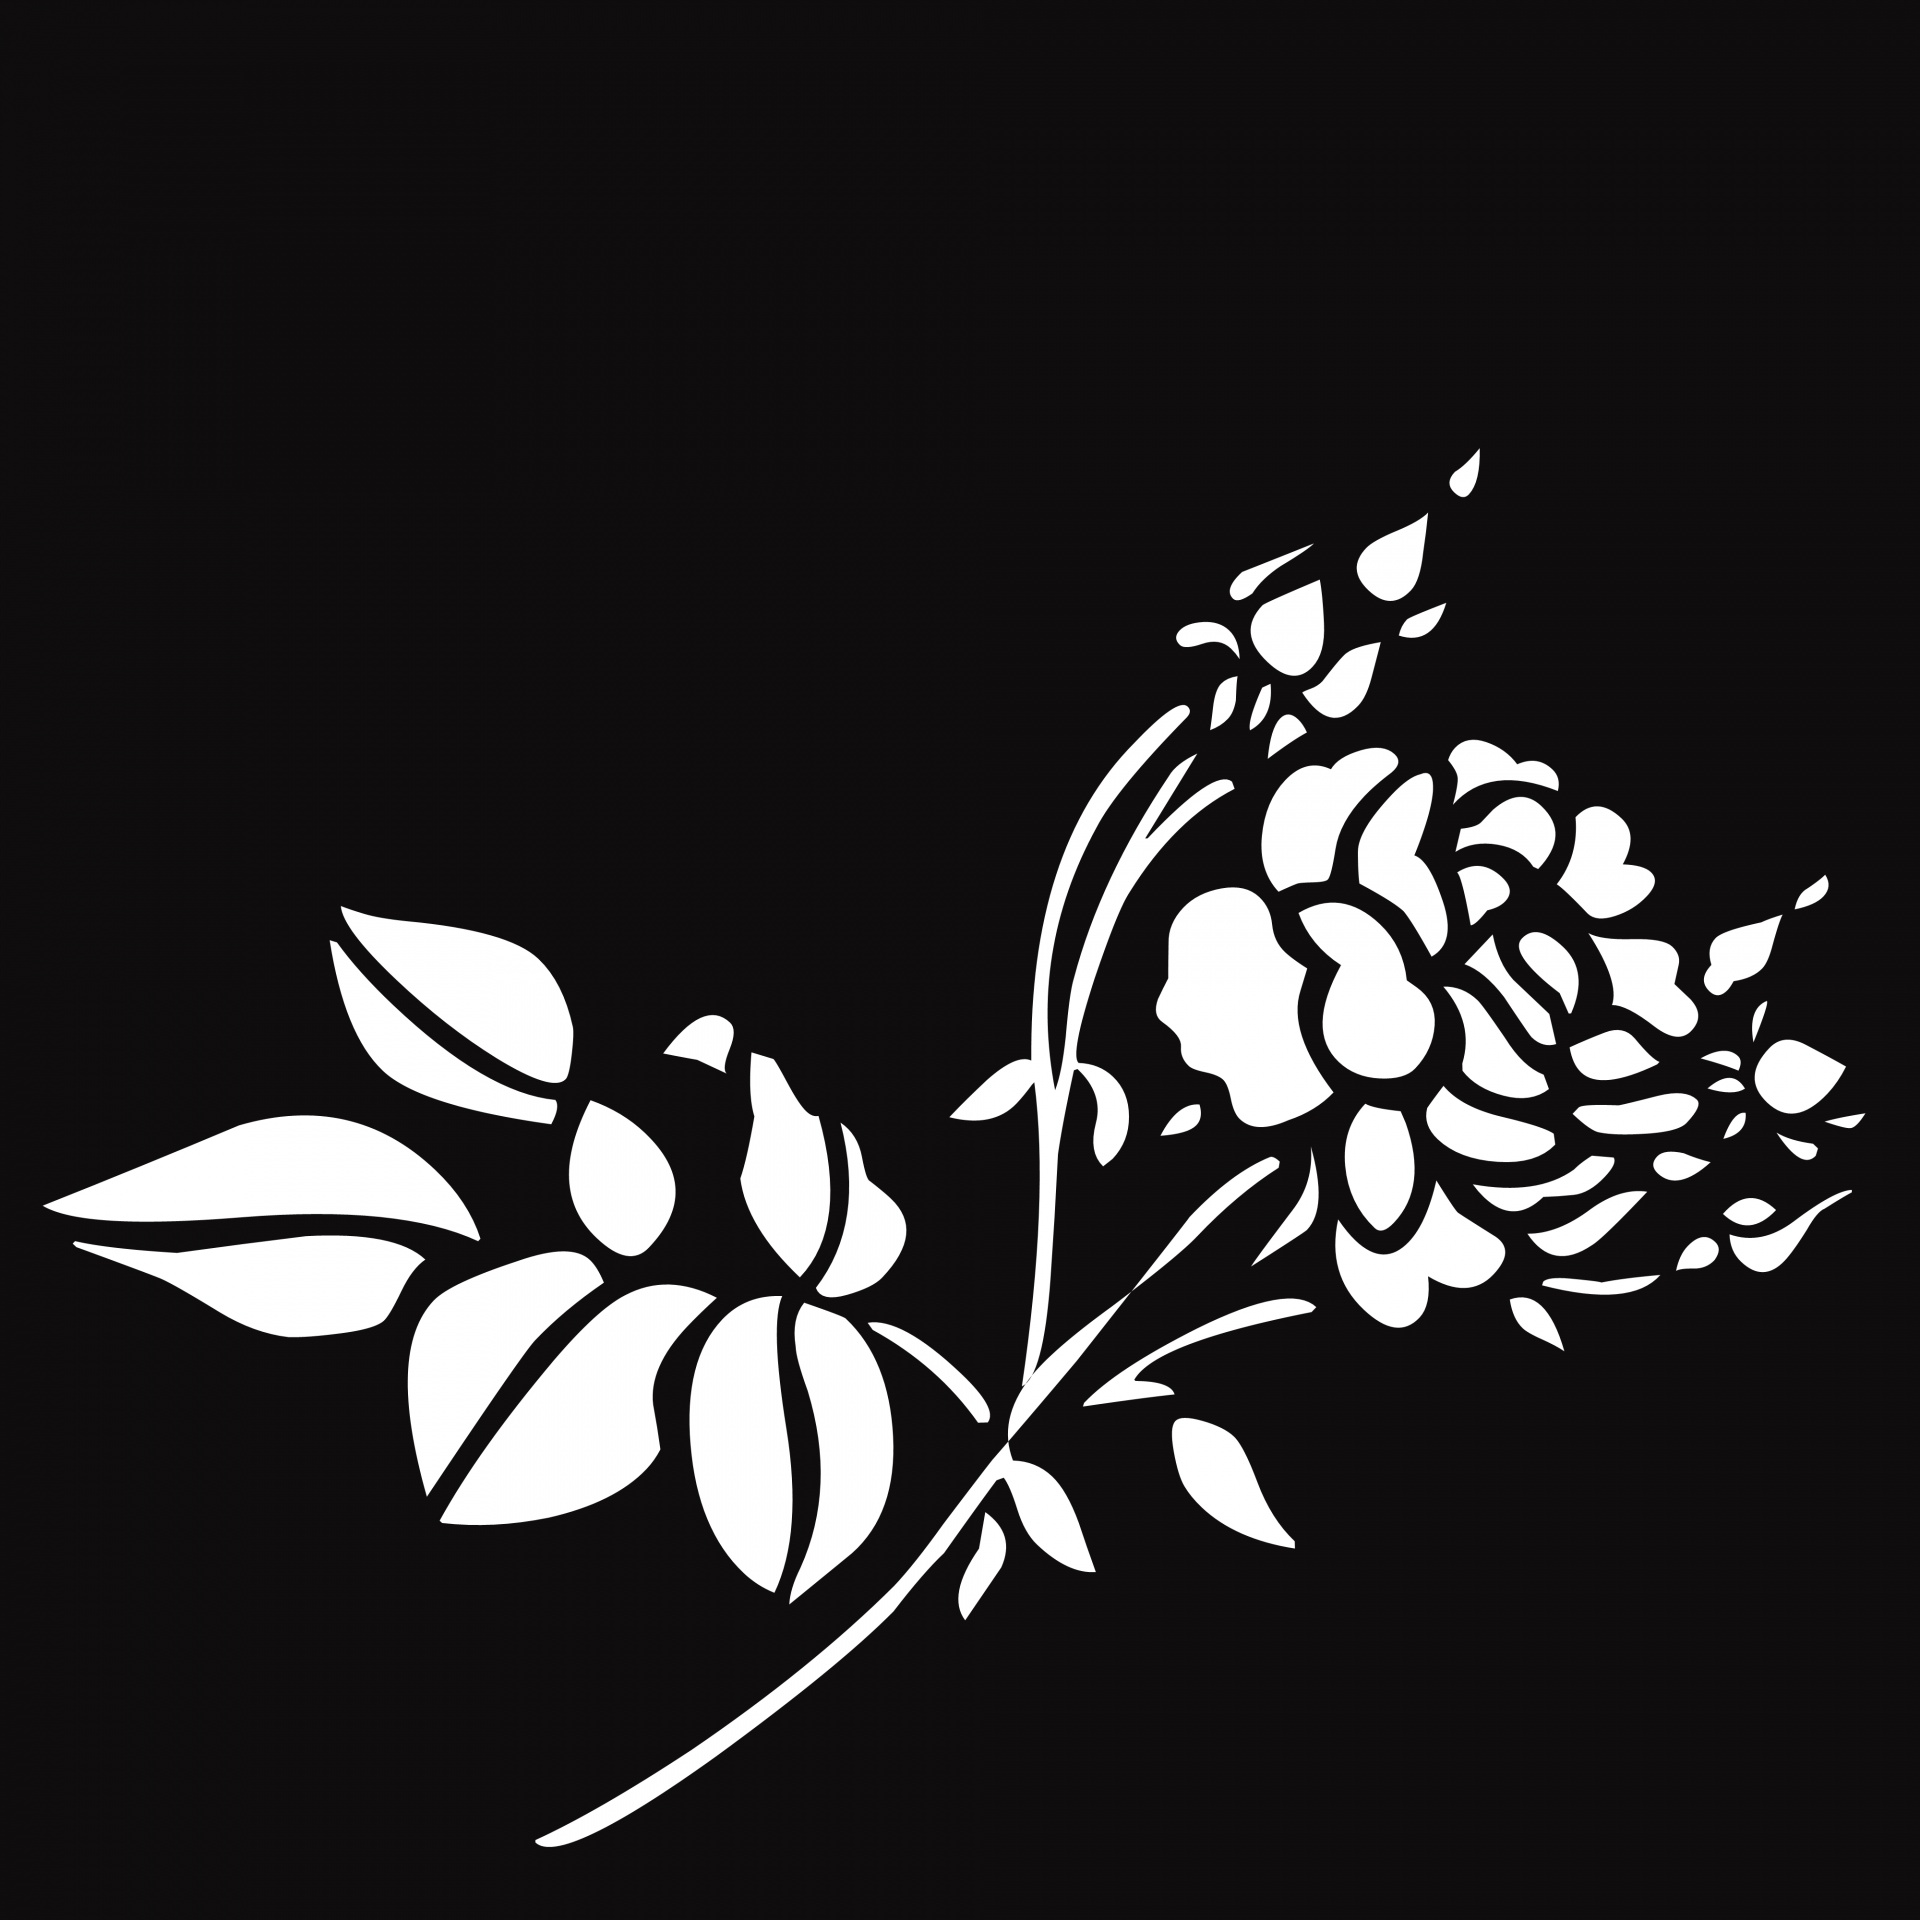 Drawing White Rose Black Background Free Image From Needpix Com